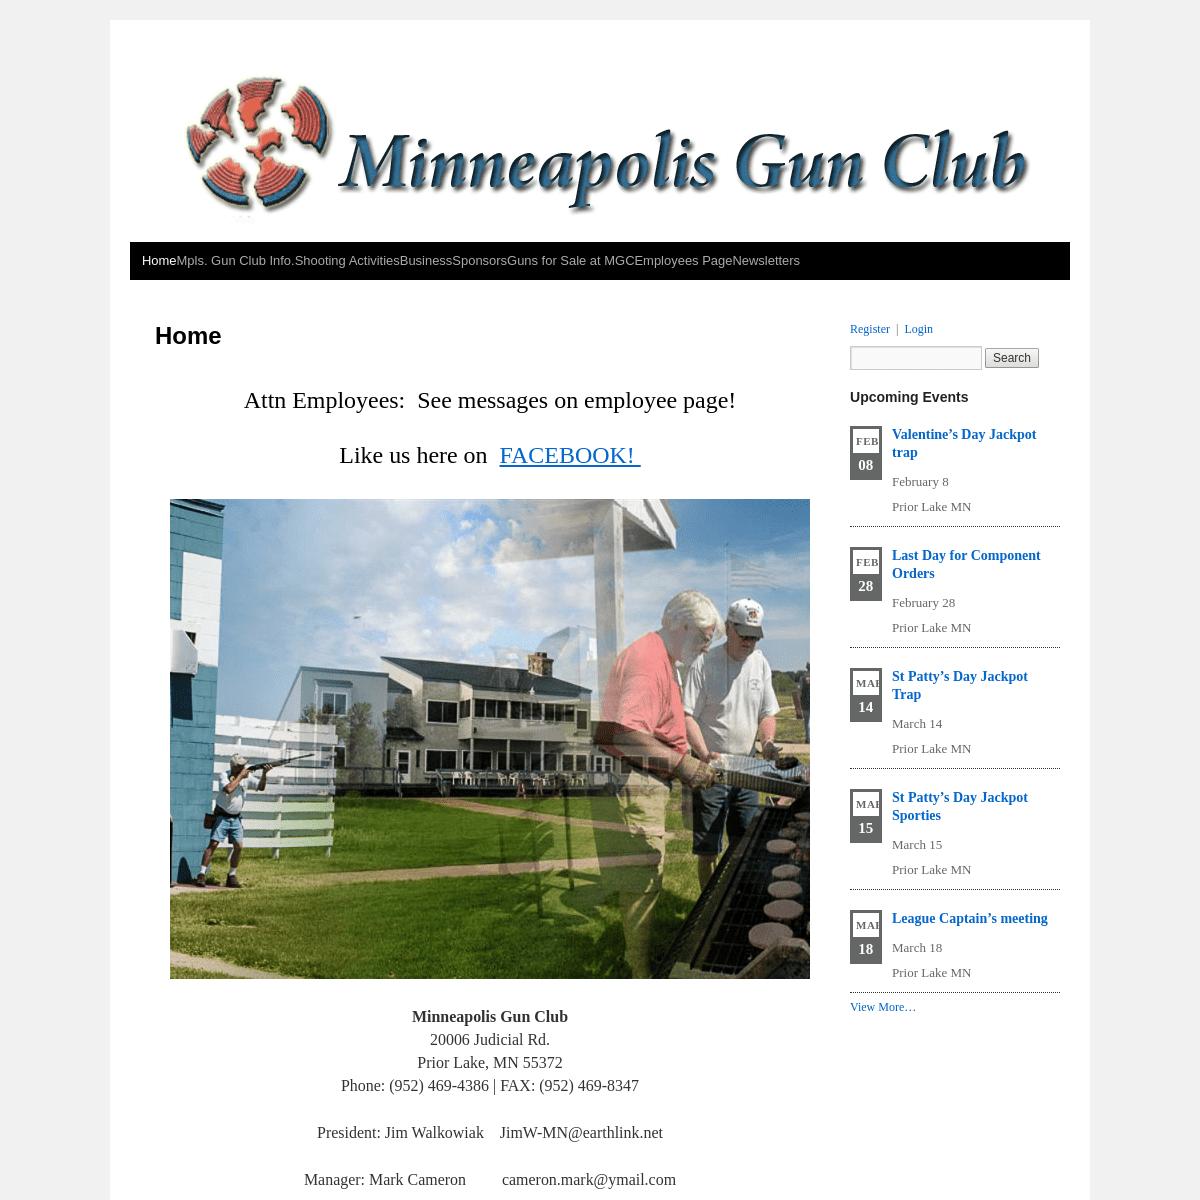 A complete backup of mplsgunclub.com